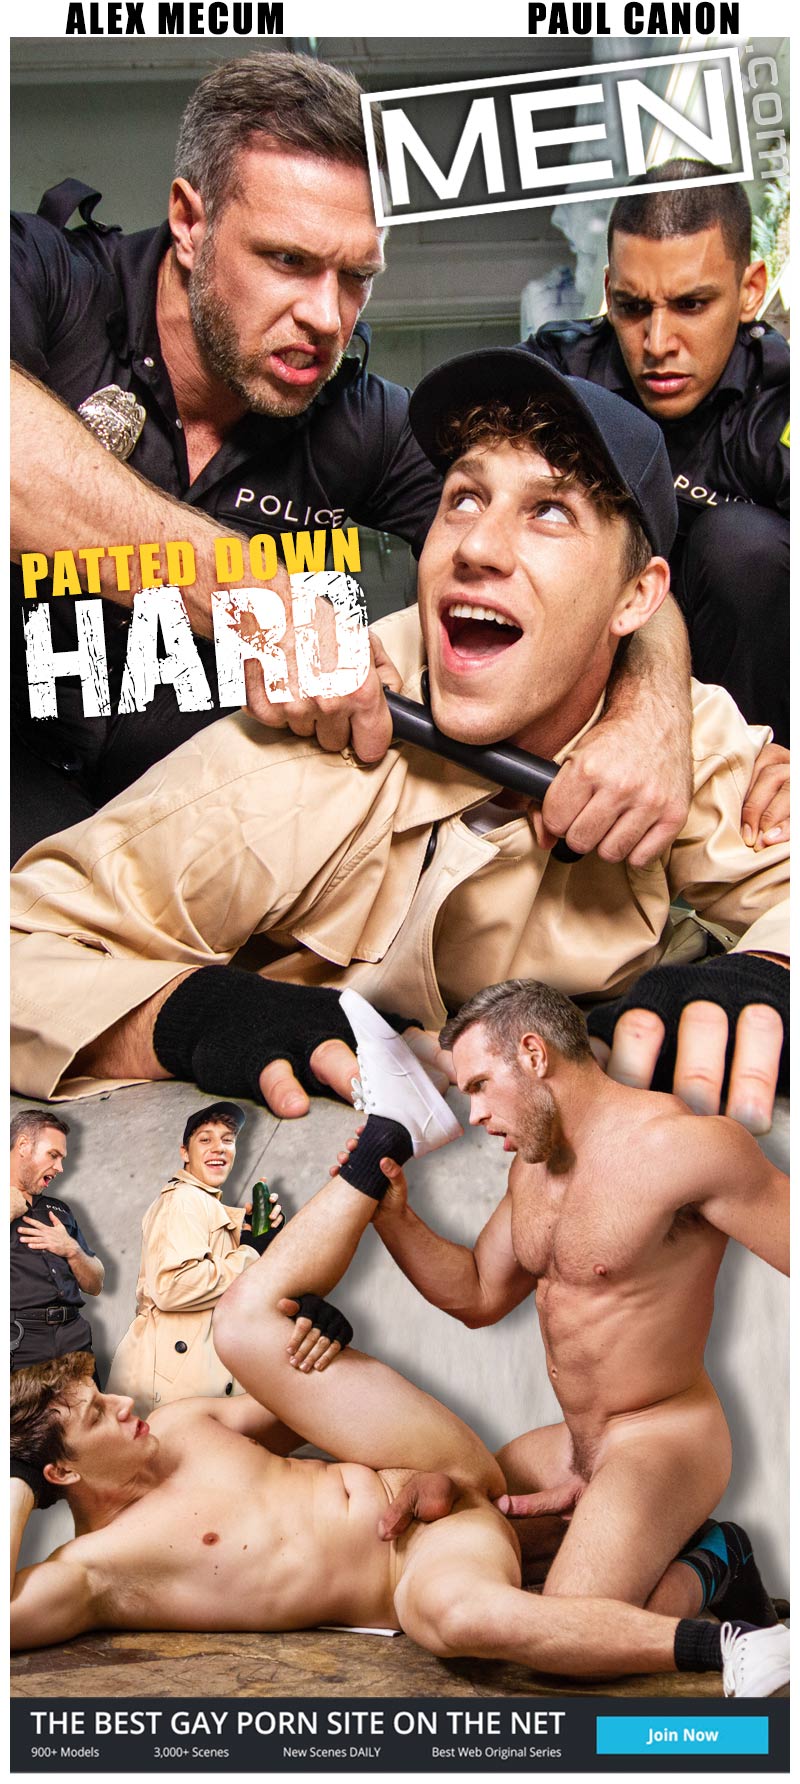 Patted Down Hard! (Alex Mecum Fucks Paul Canon) at MEN.com